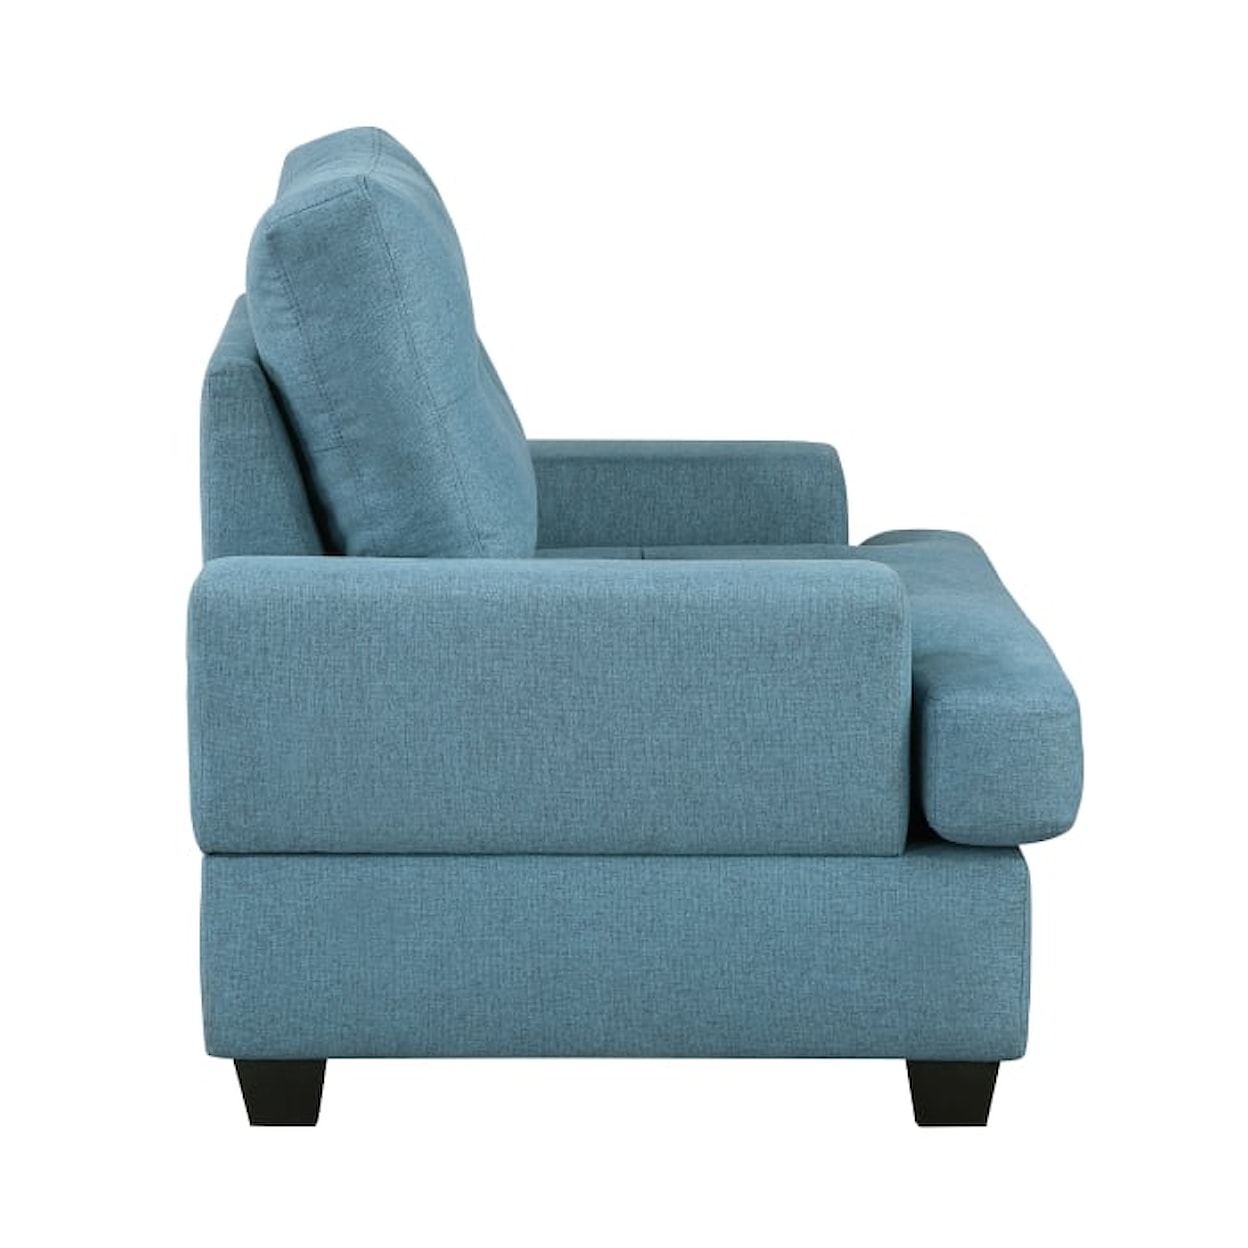 Homelegance Furniture Dunstan Accent Chair